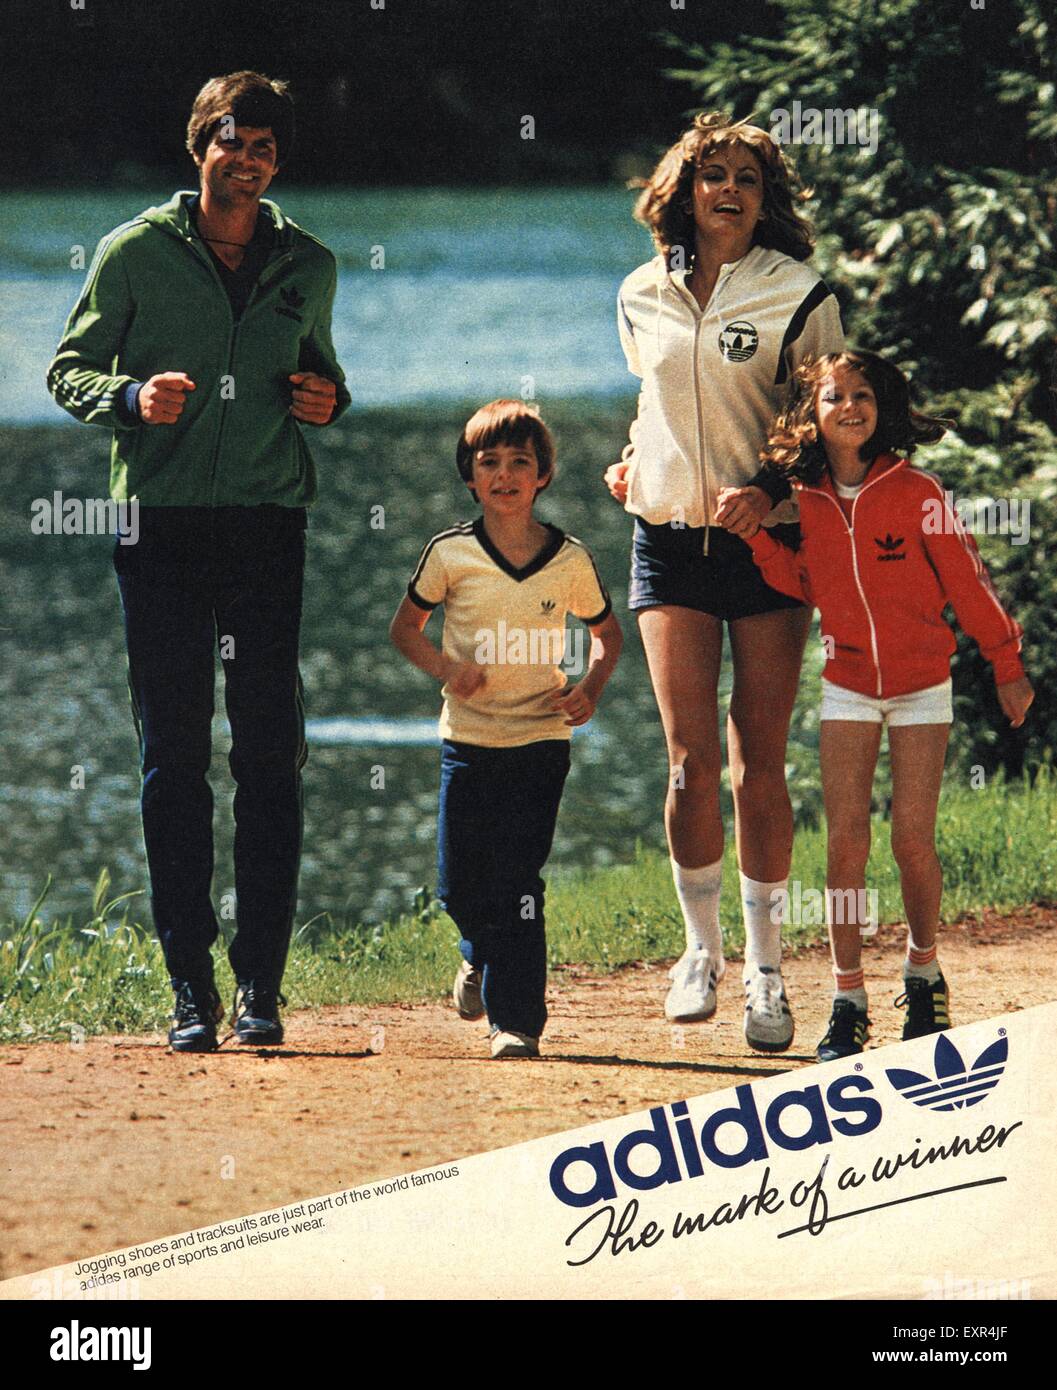 1980er Jahre UK Adidas Magazin Anzeige Stockfotografie - Alamy